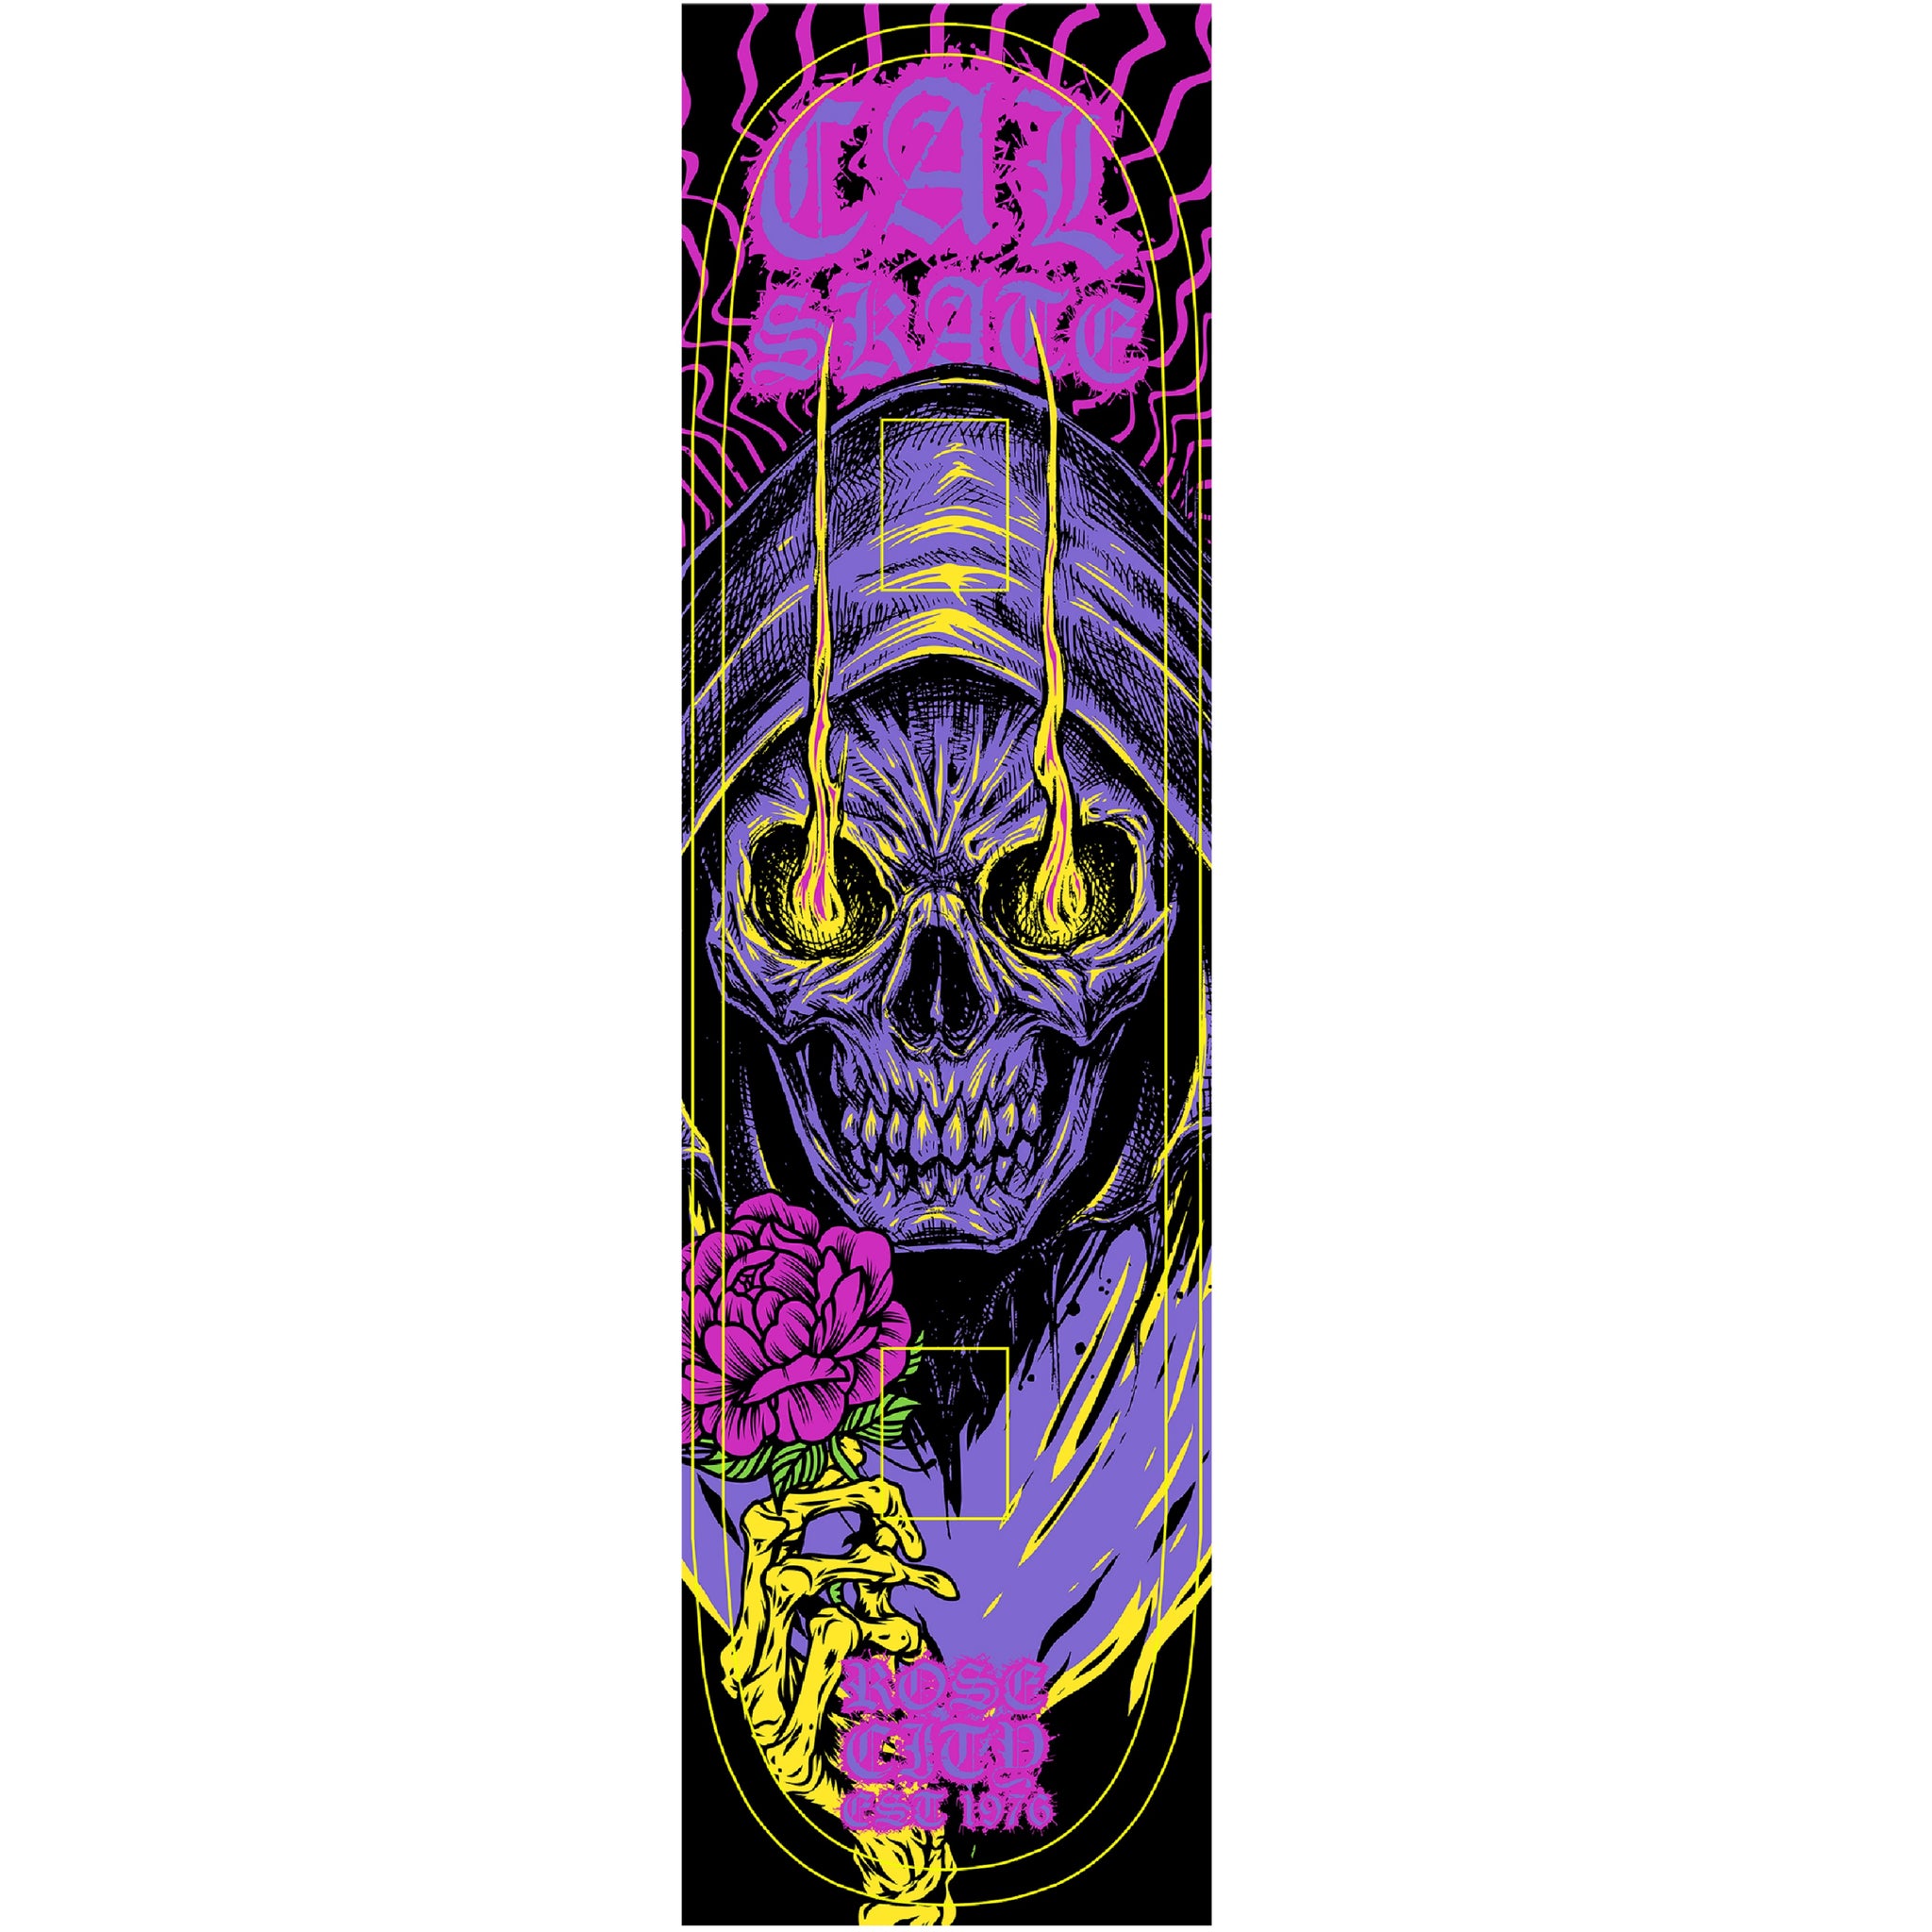 Cal Skate "Rose City Reaper" Graphic Griptape